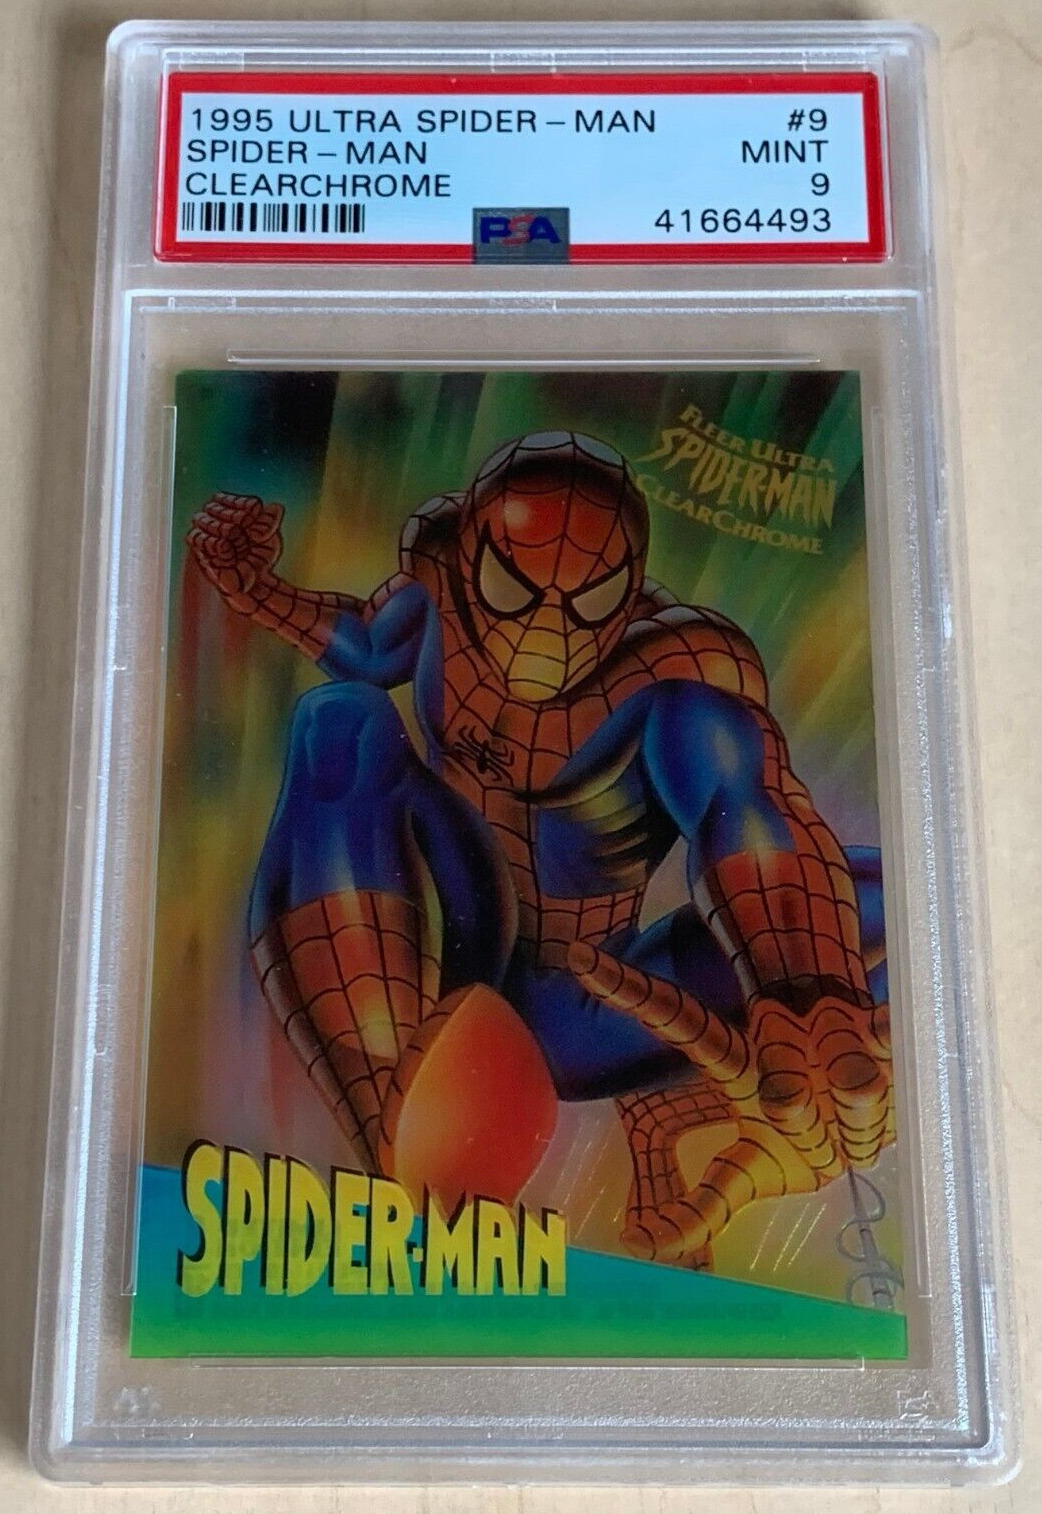 1995 Marvel Fleer Ultra Spider-Man  ClearChrome #9 💎 SPIDER-MAN 💎 PSA 9